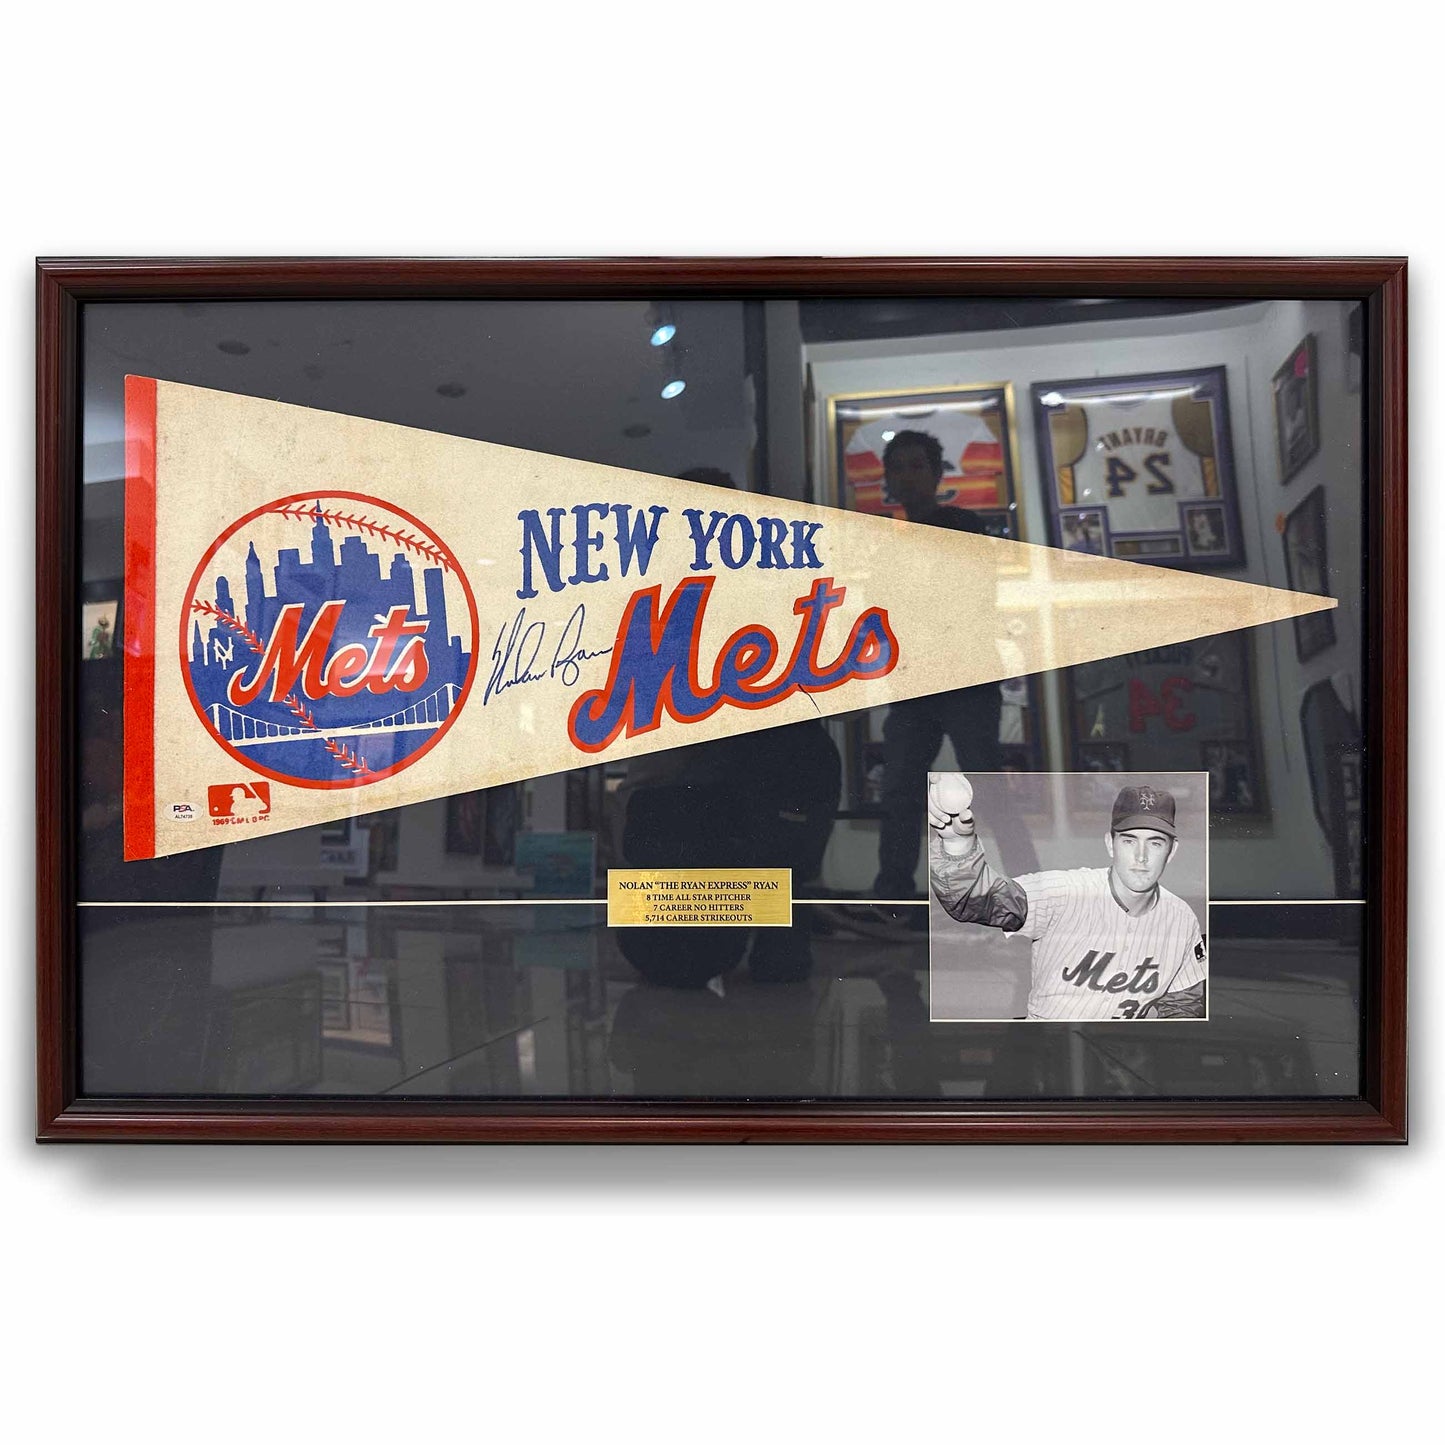 Art Center Gallery Nolan Ryan New York Mets Framed Pennant Flag Collectible